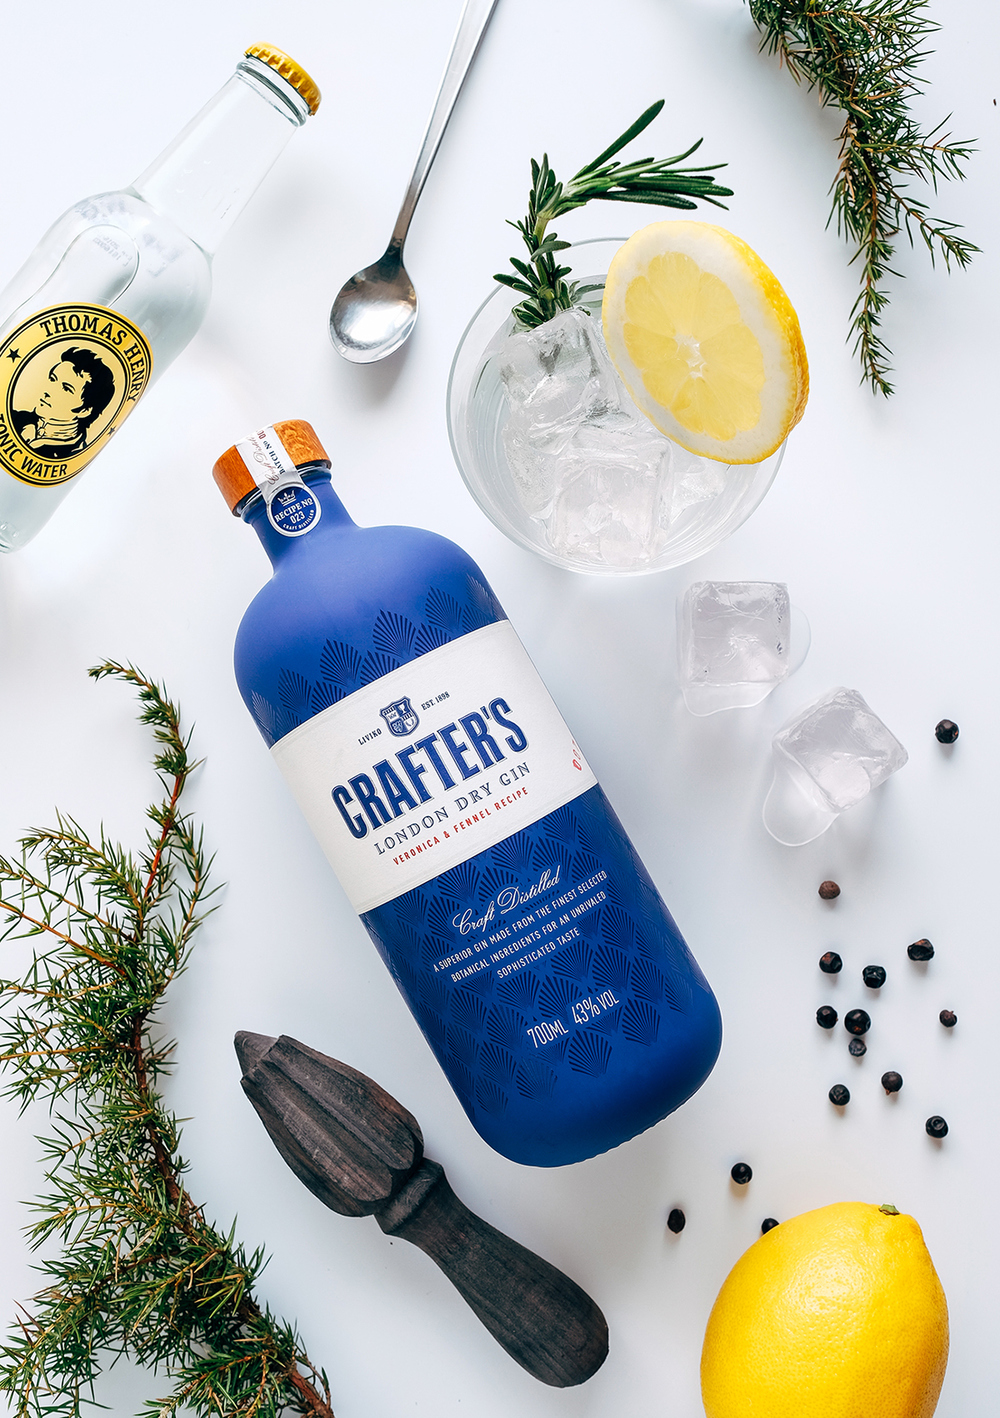 KOOR Packaging design – Crafters Gin